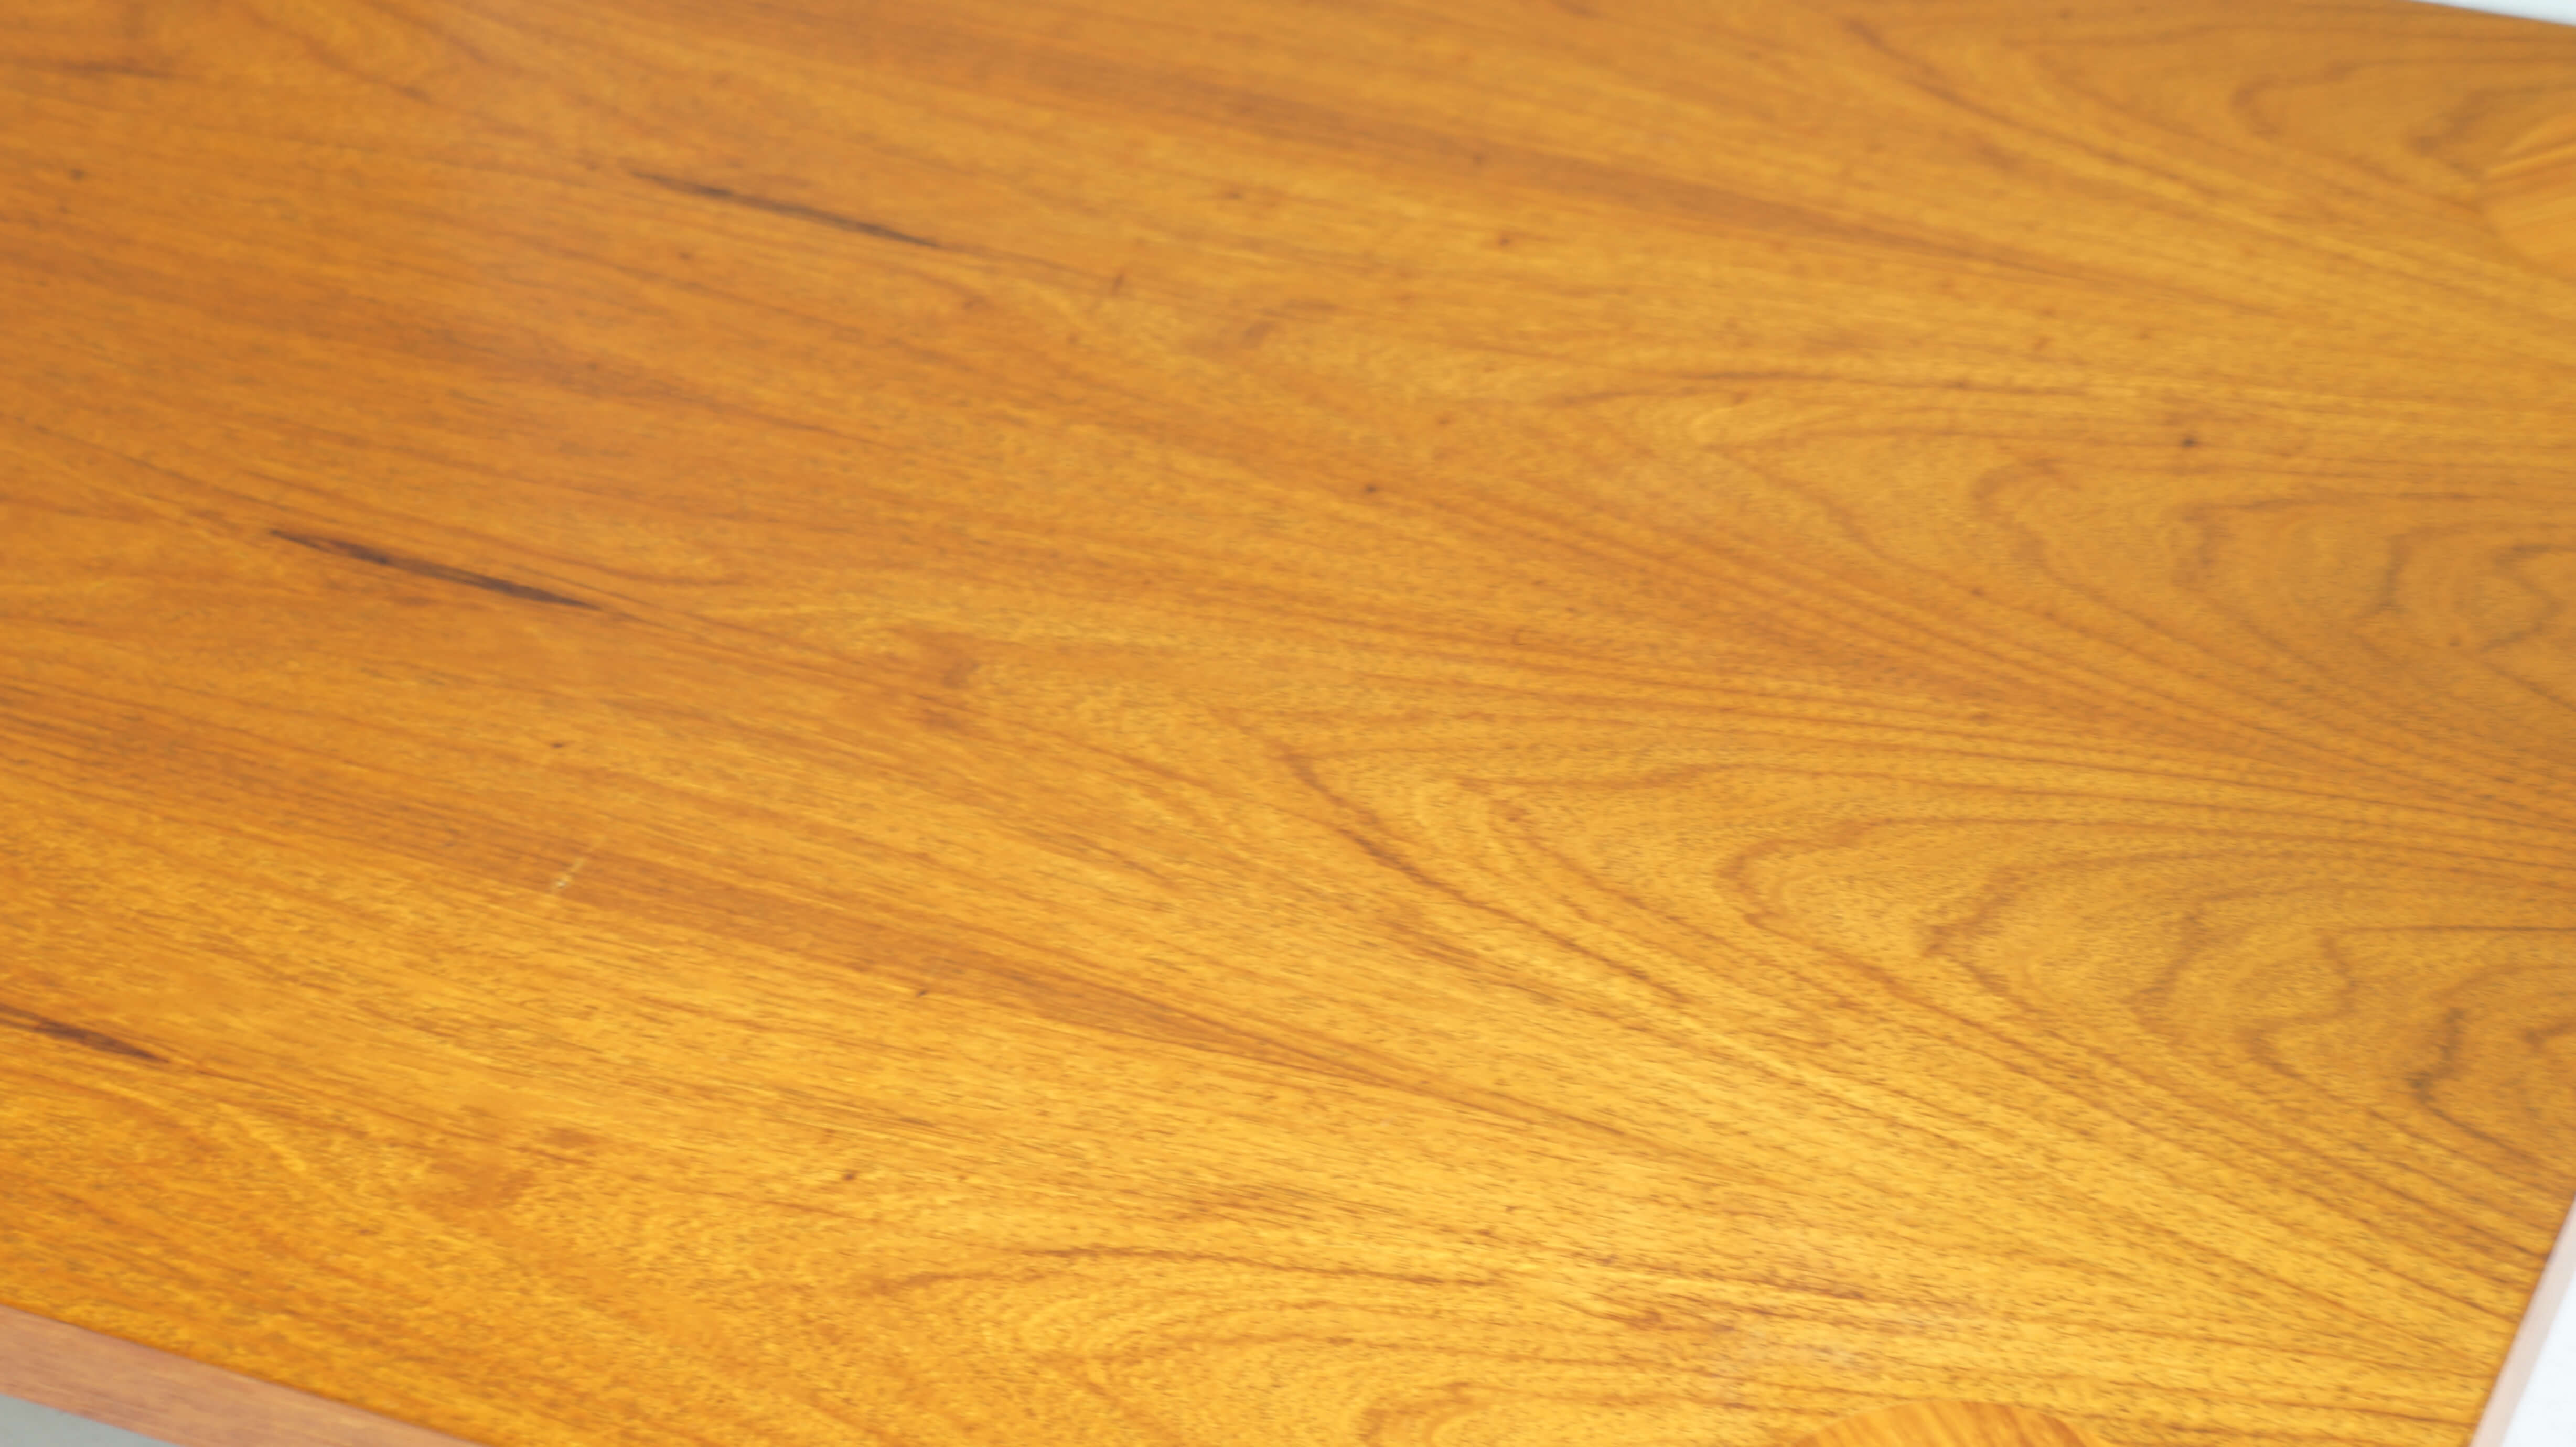 TENDO MOKKO ROSE WOOD LOW TABLE "ZATAKU" DESIGN BY SABURO INUI /廃盤 天童木工 ローズウッド 座卓 センターテーブル 乾 三郎 デザイン